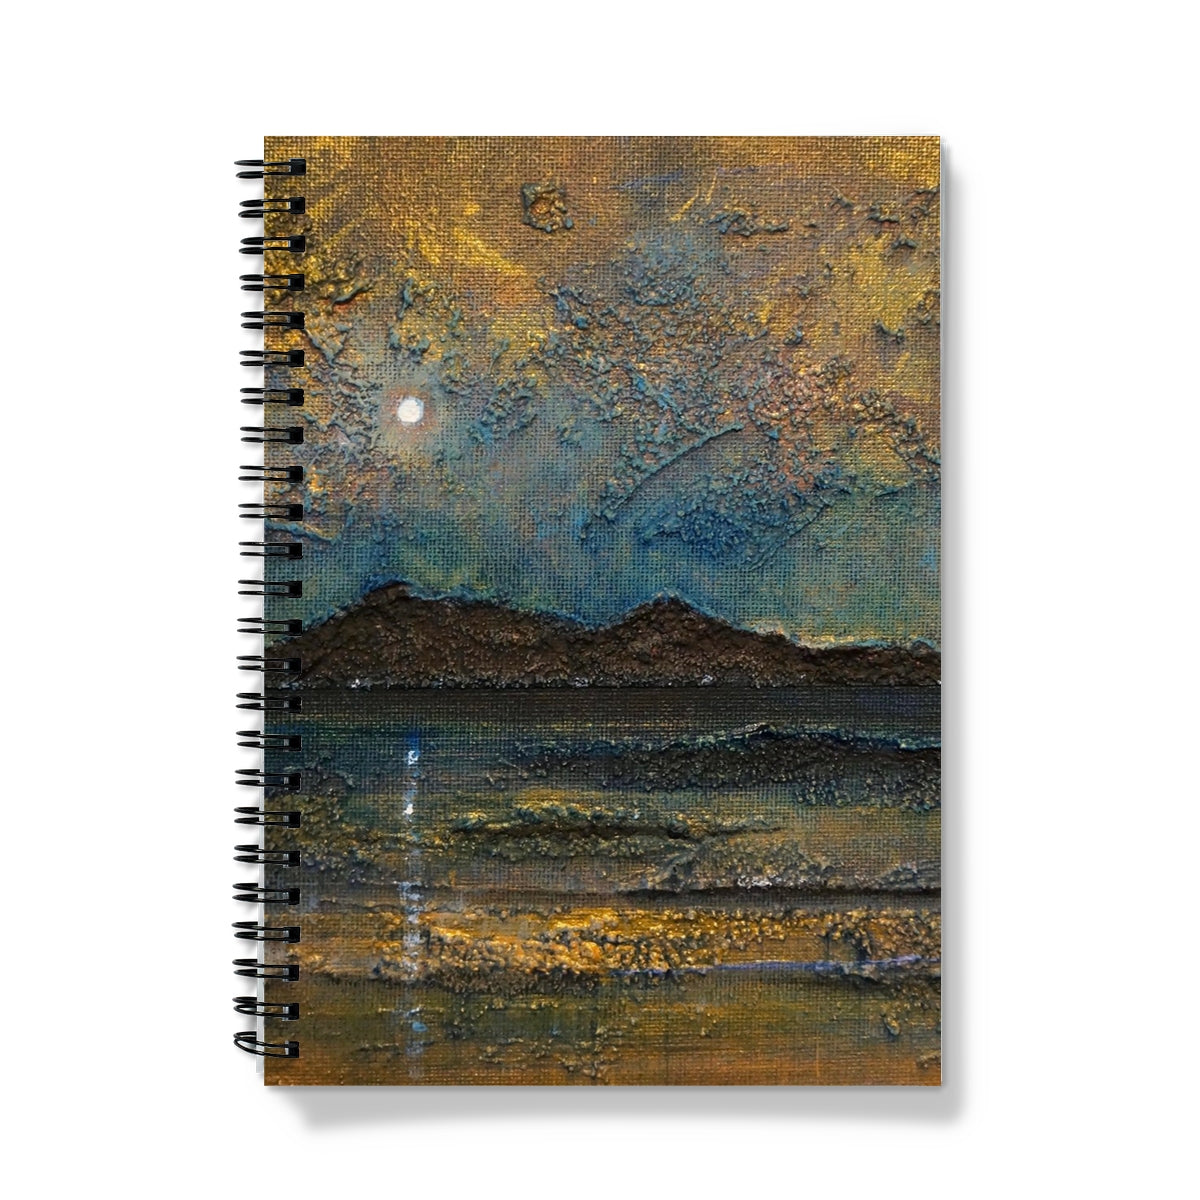 Arran Moonlight Art Gifts Notebook-Journals & Notebooks-Arran Art Gallery-A4-Lined-Paintings, Prints, Homeware, Art Gifts From Scotland By Scottish Artist Kevin Hunter